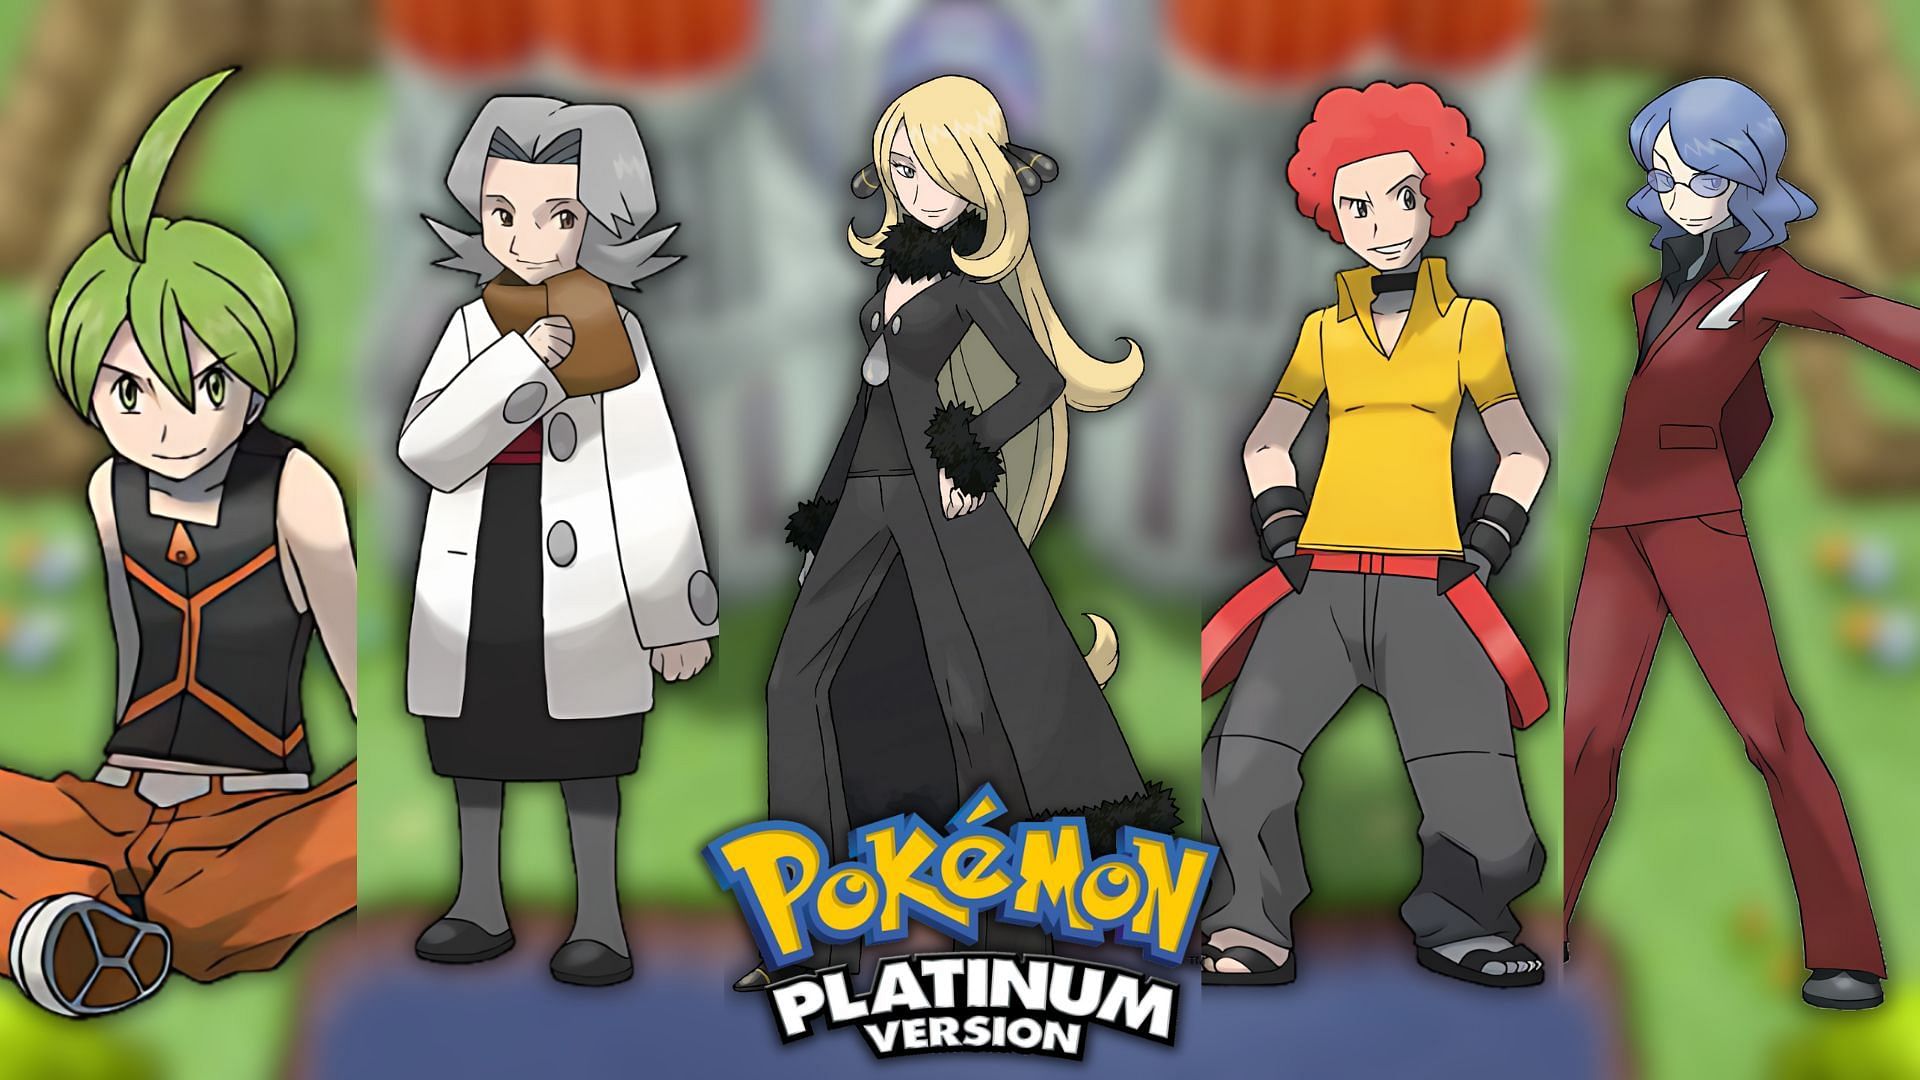 Pokemon Platinum: How to defeat Elite Four and Champion